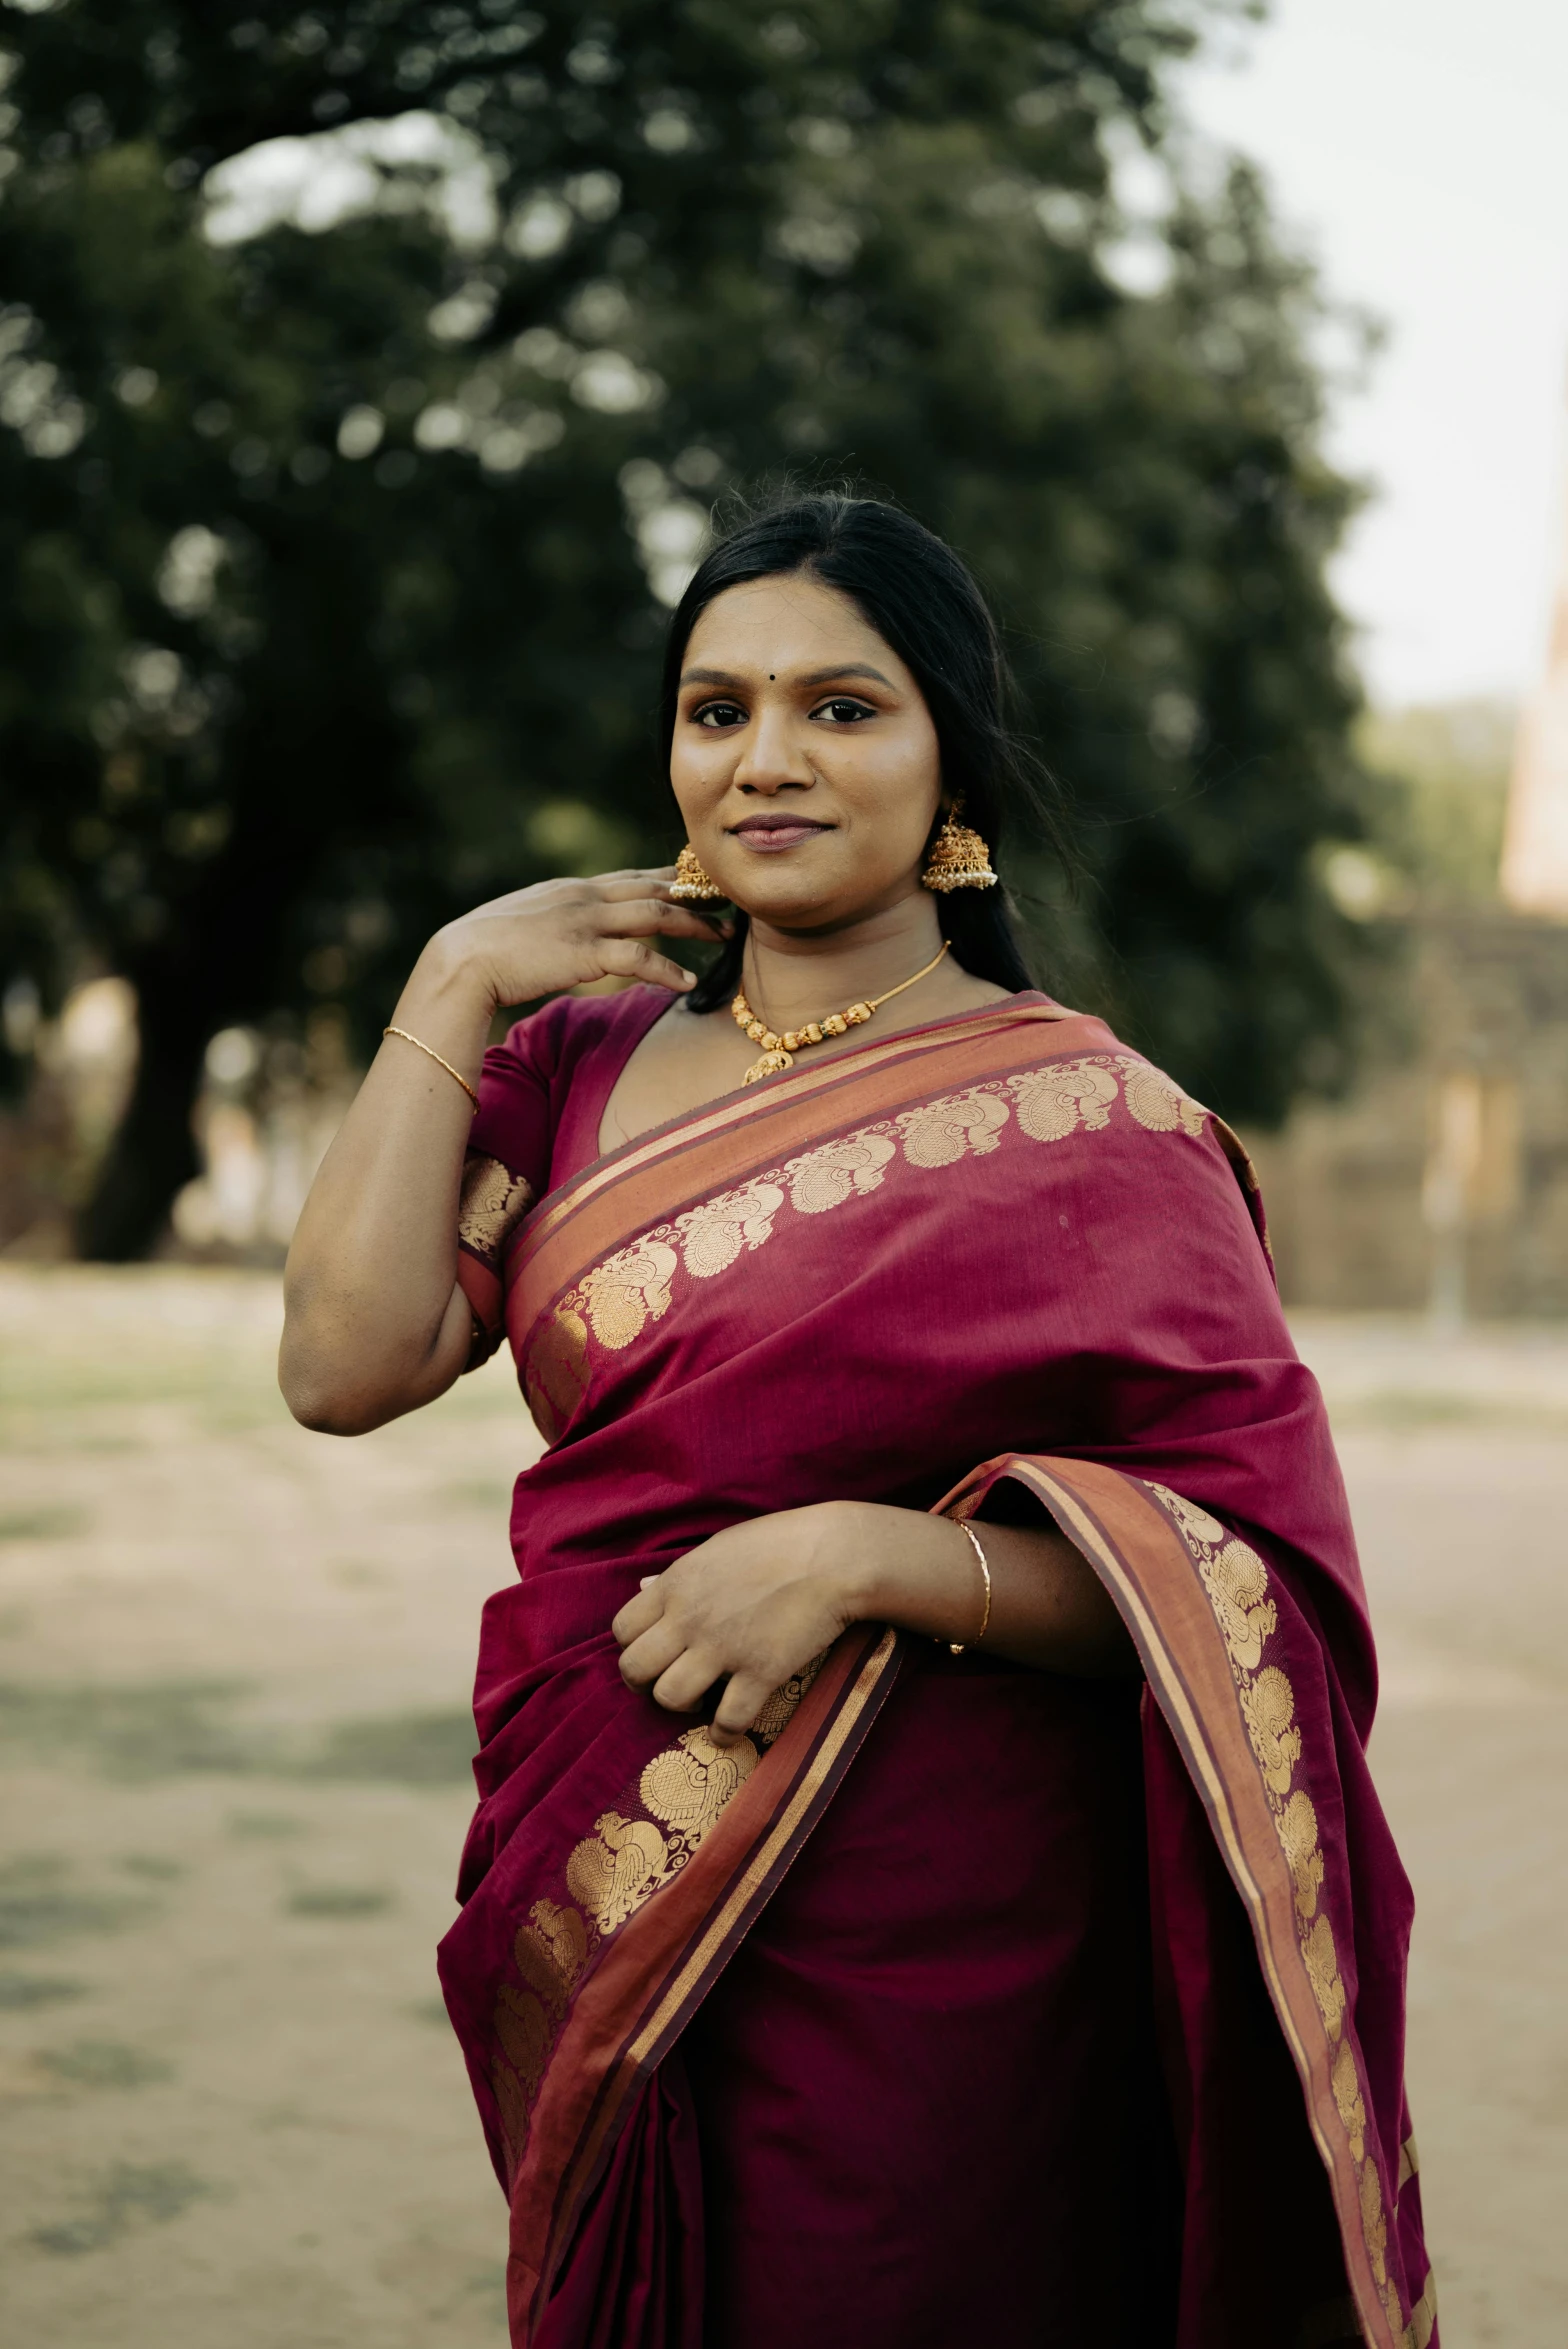 a woman with dark hair wearing a maroon sari